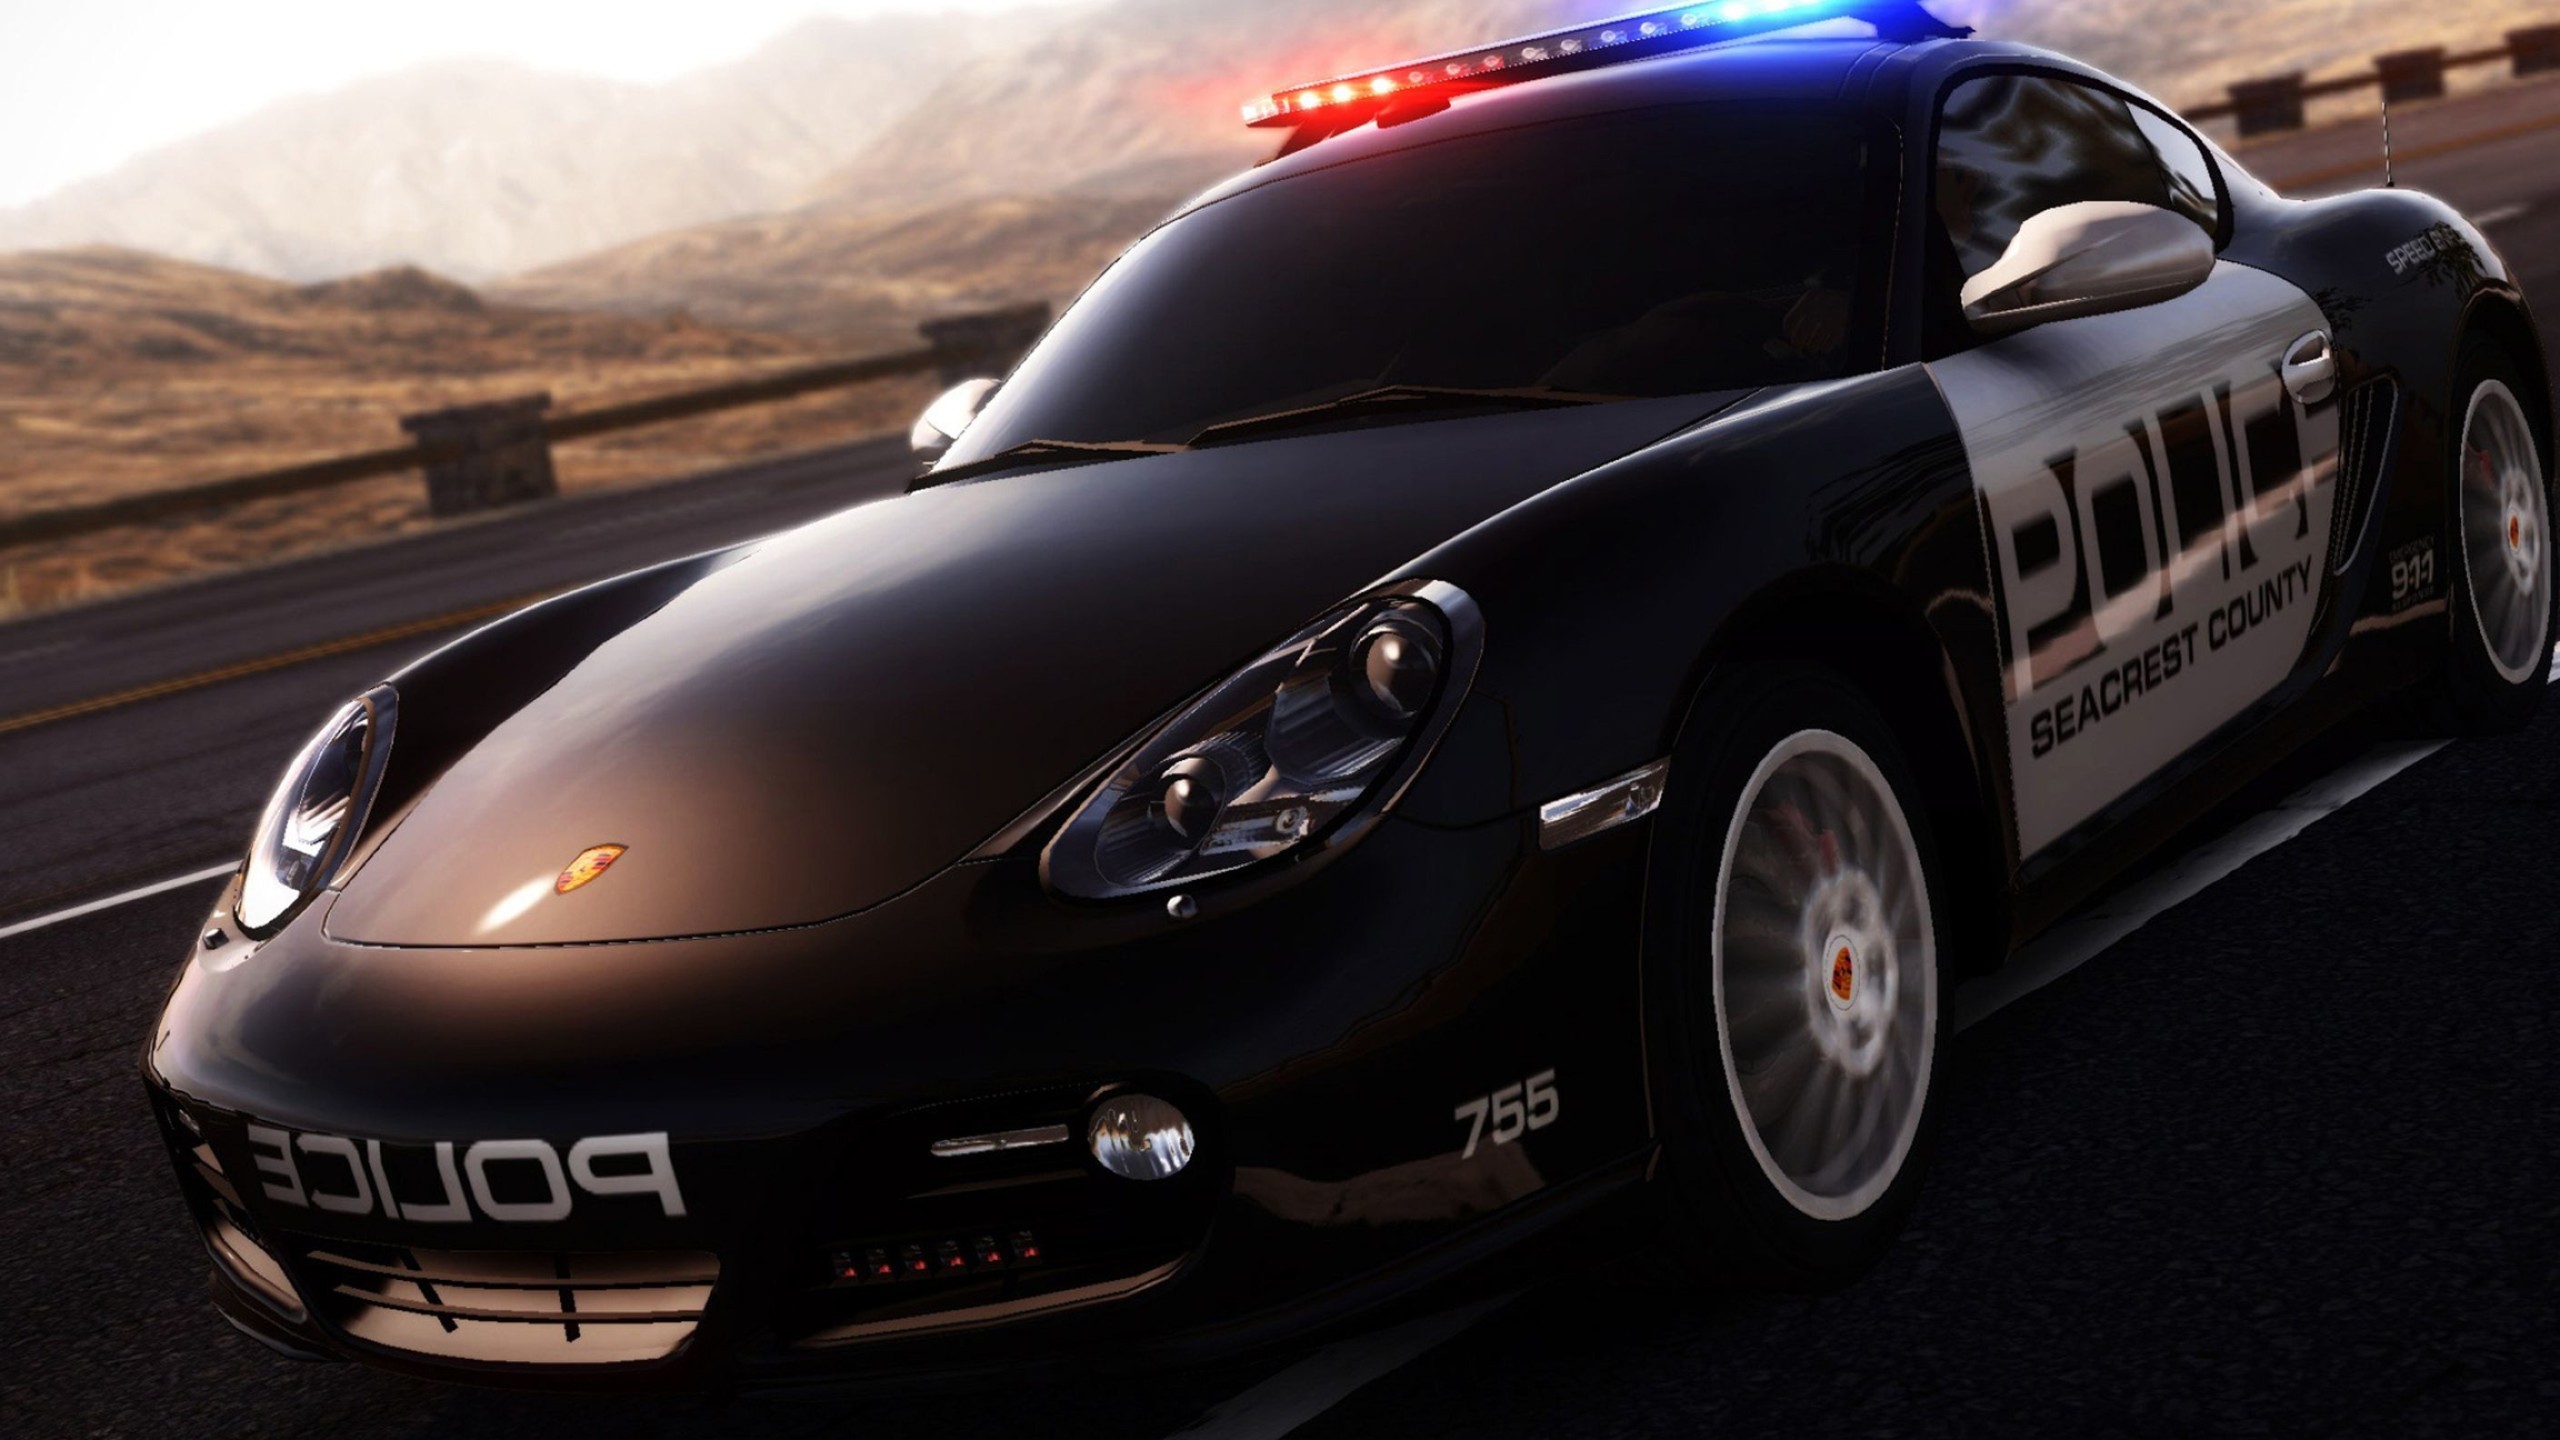 2560x1440 3D Police Car Desktop Backgrounds Wallpaper